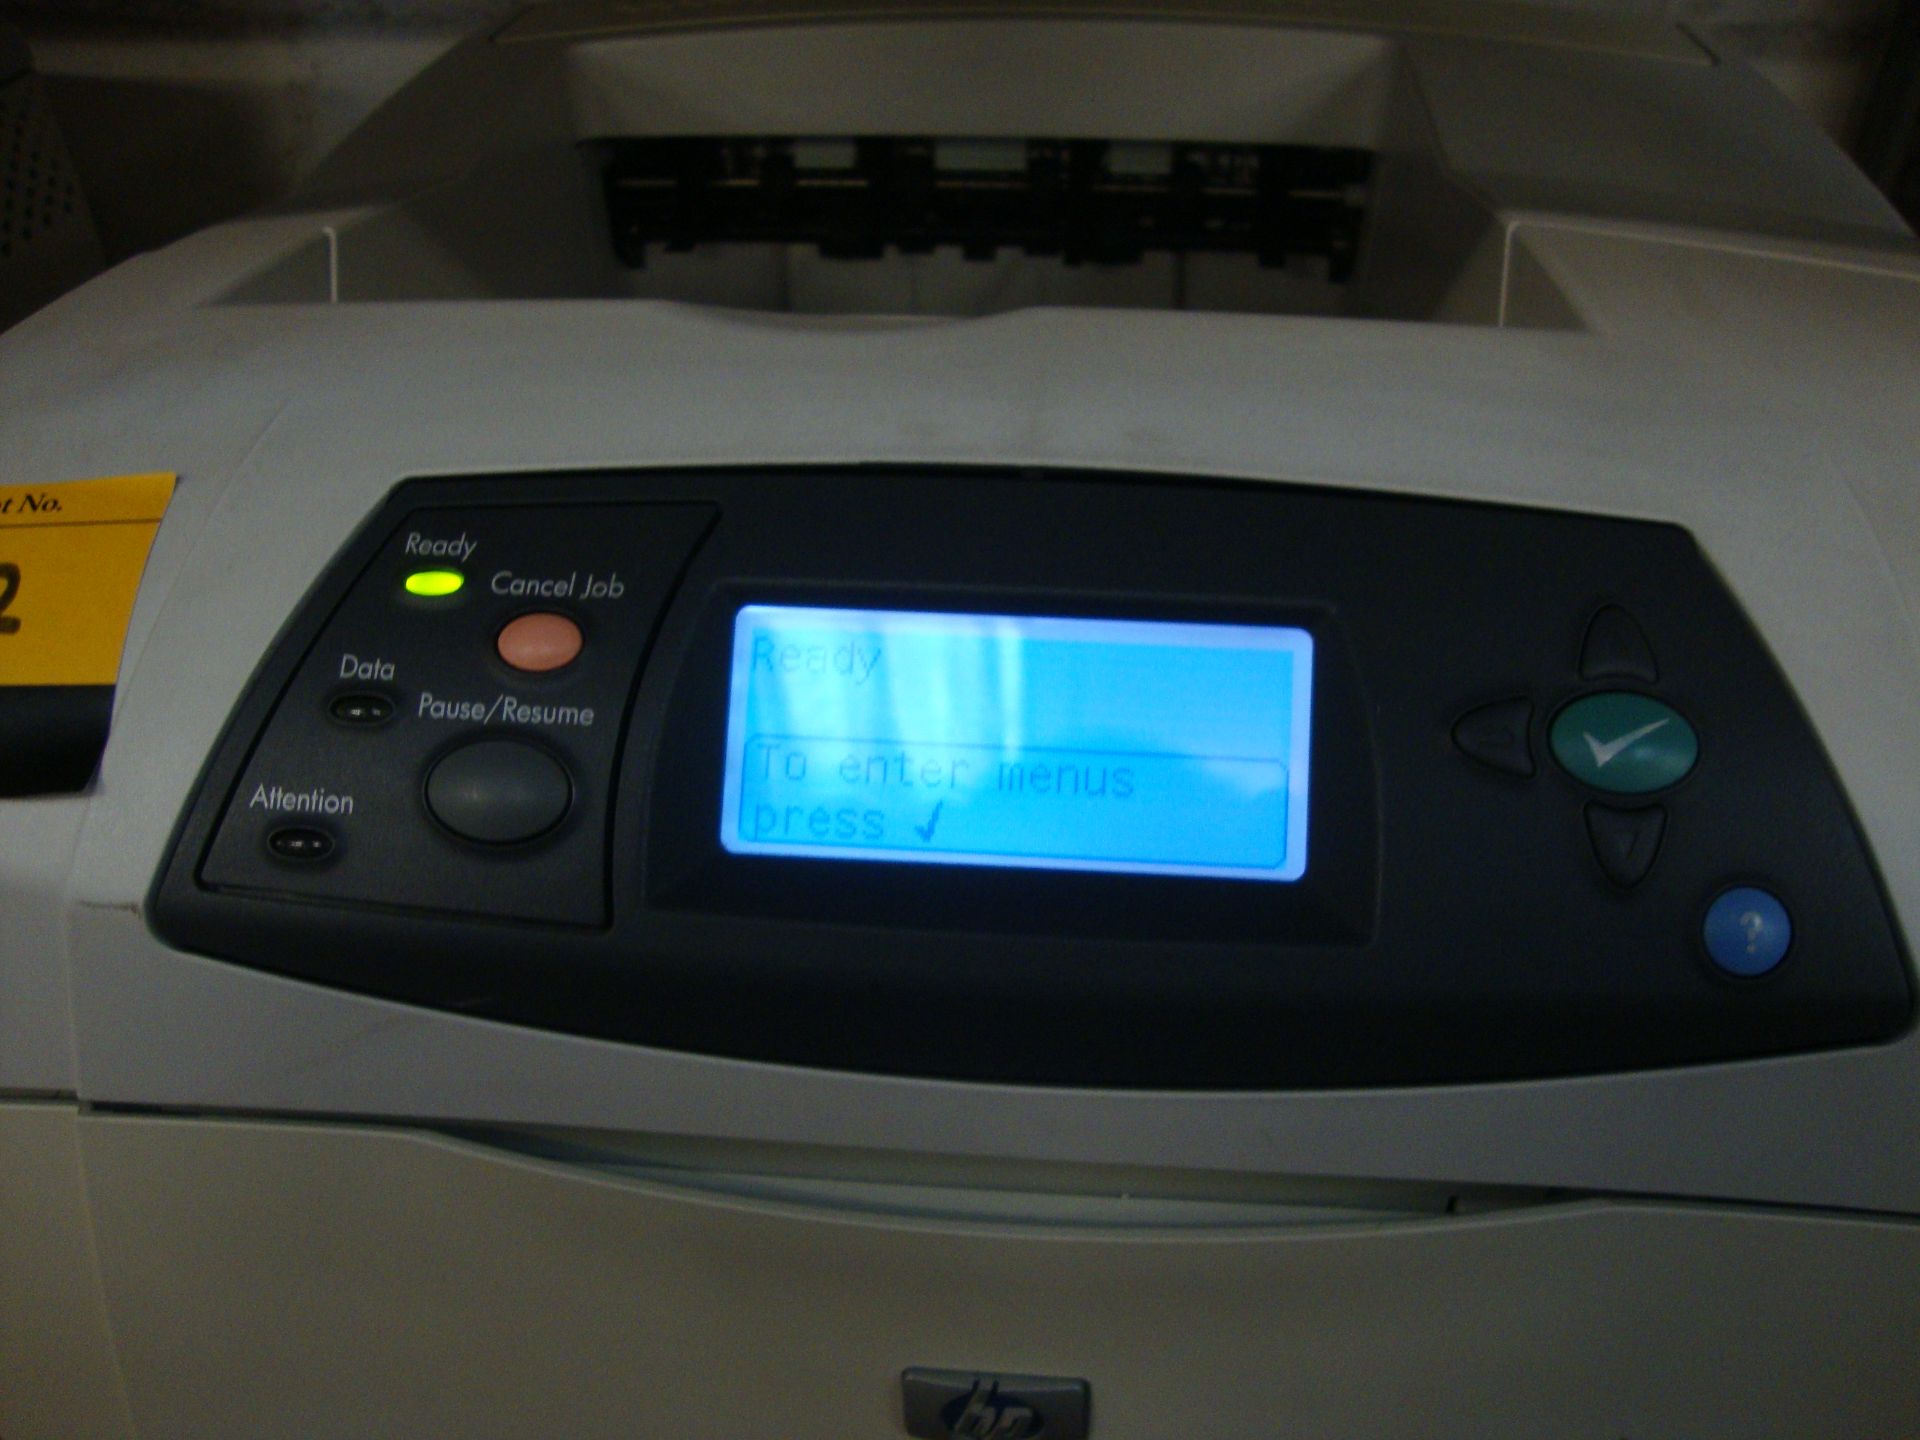 HP LaserJet 4200N - Image 6 of 6